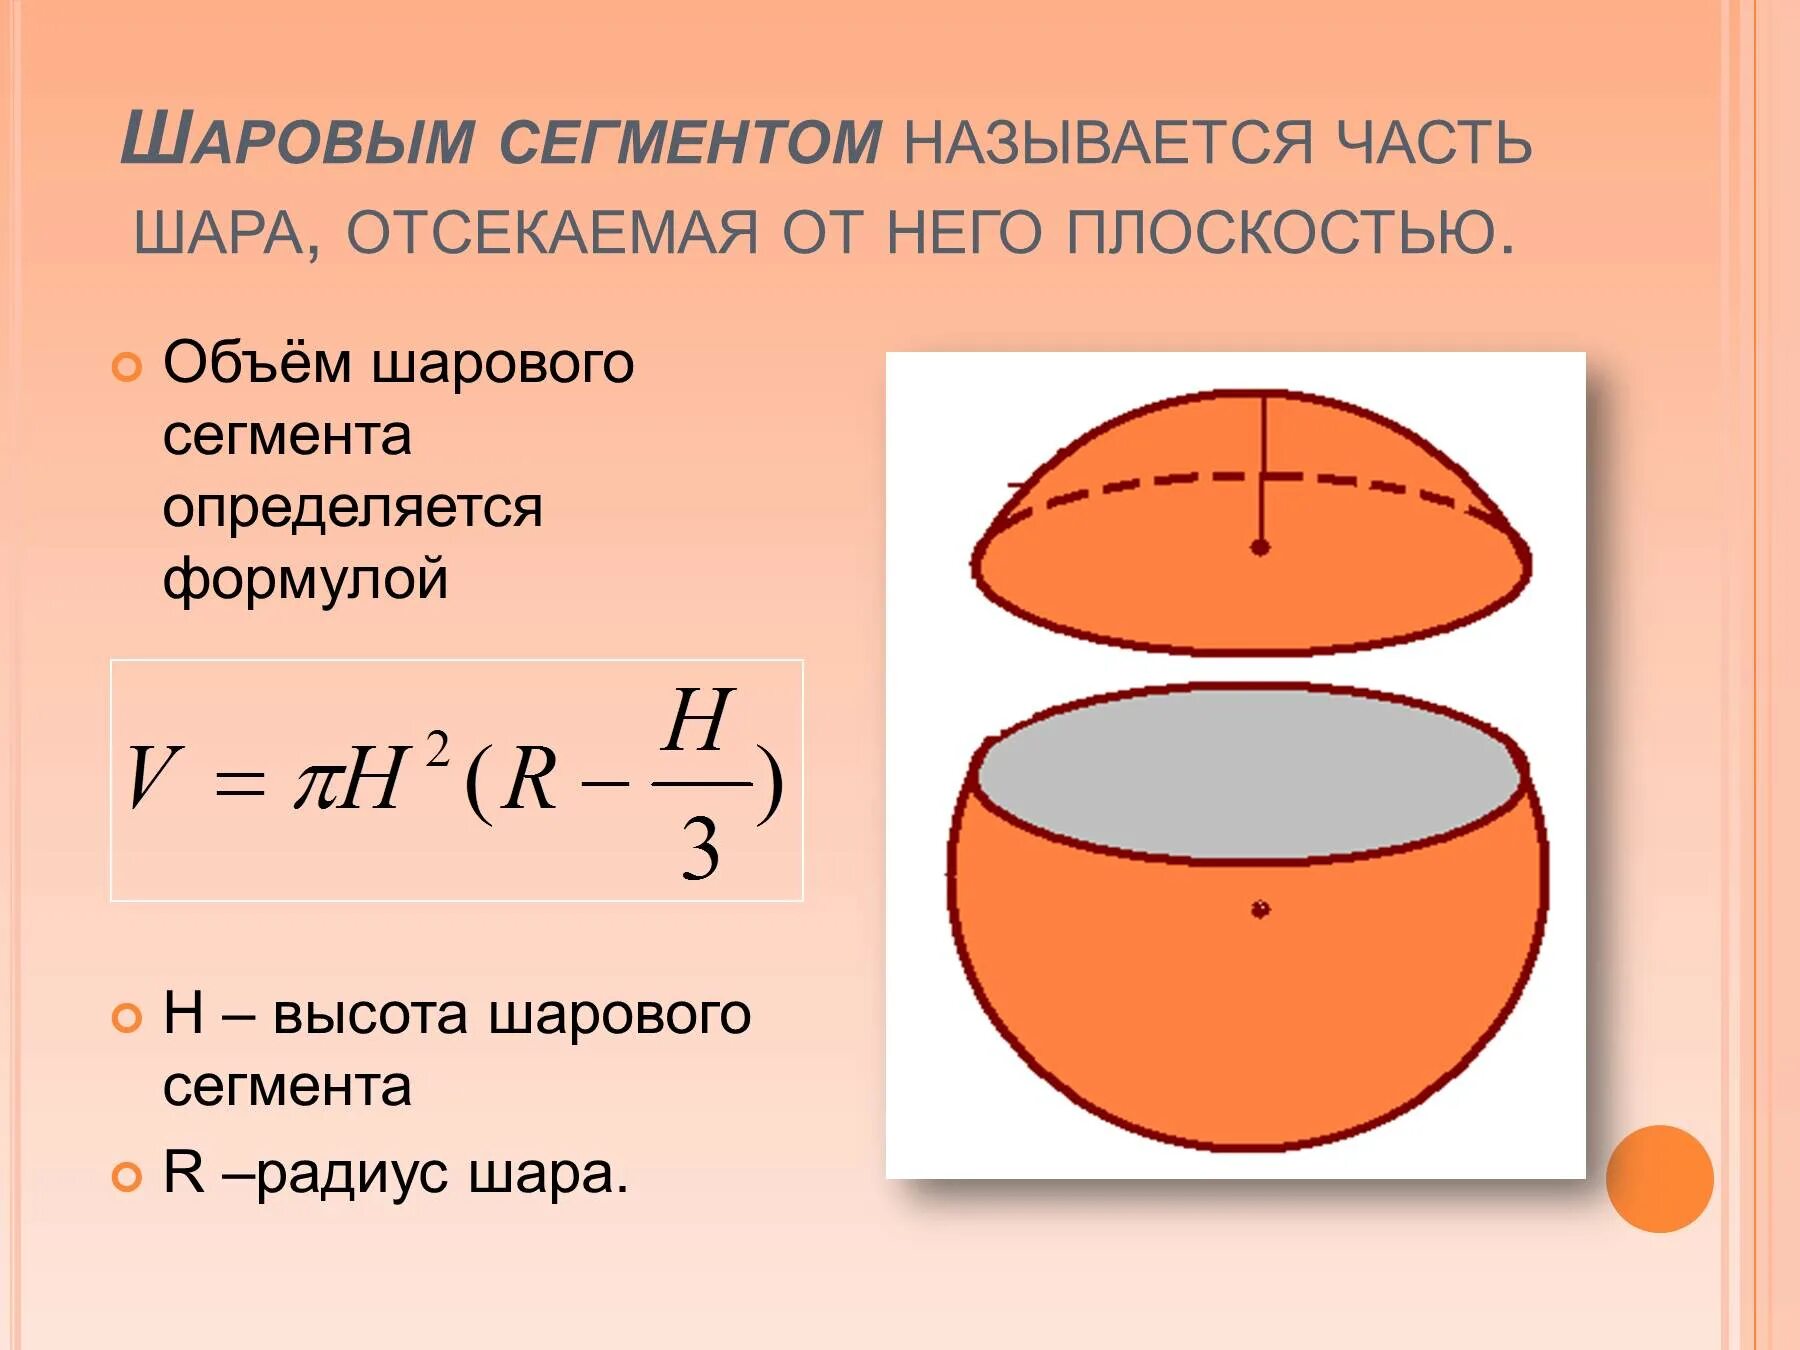 D шара формула. Формула объема части шара. Объём сегмента шара формула. Объем шарового сегмента формула. Объем шара и его частей формулы.